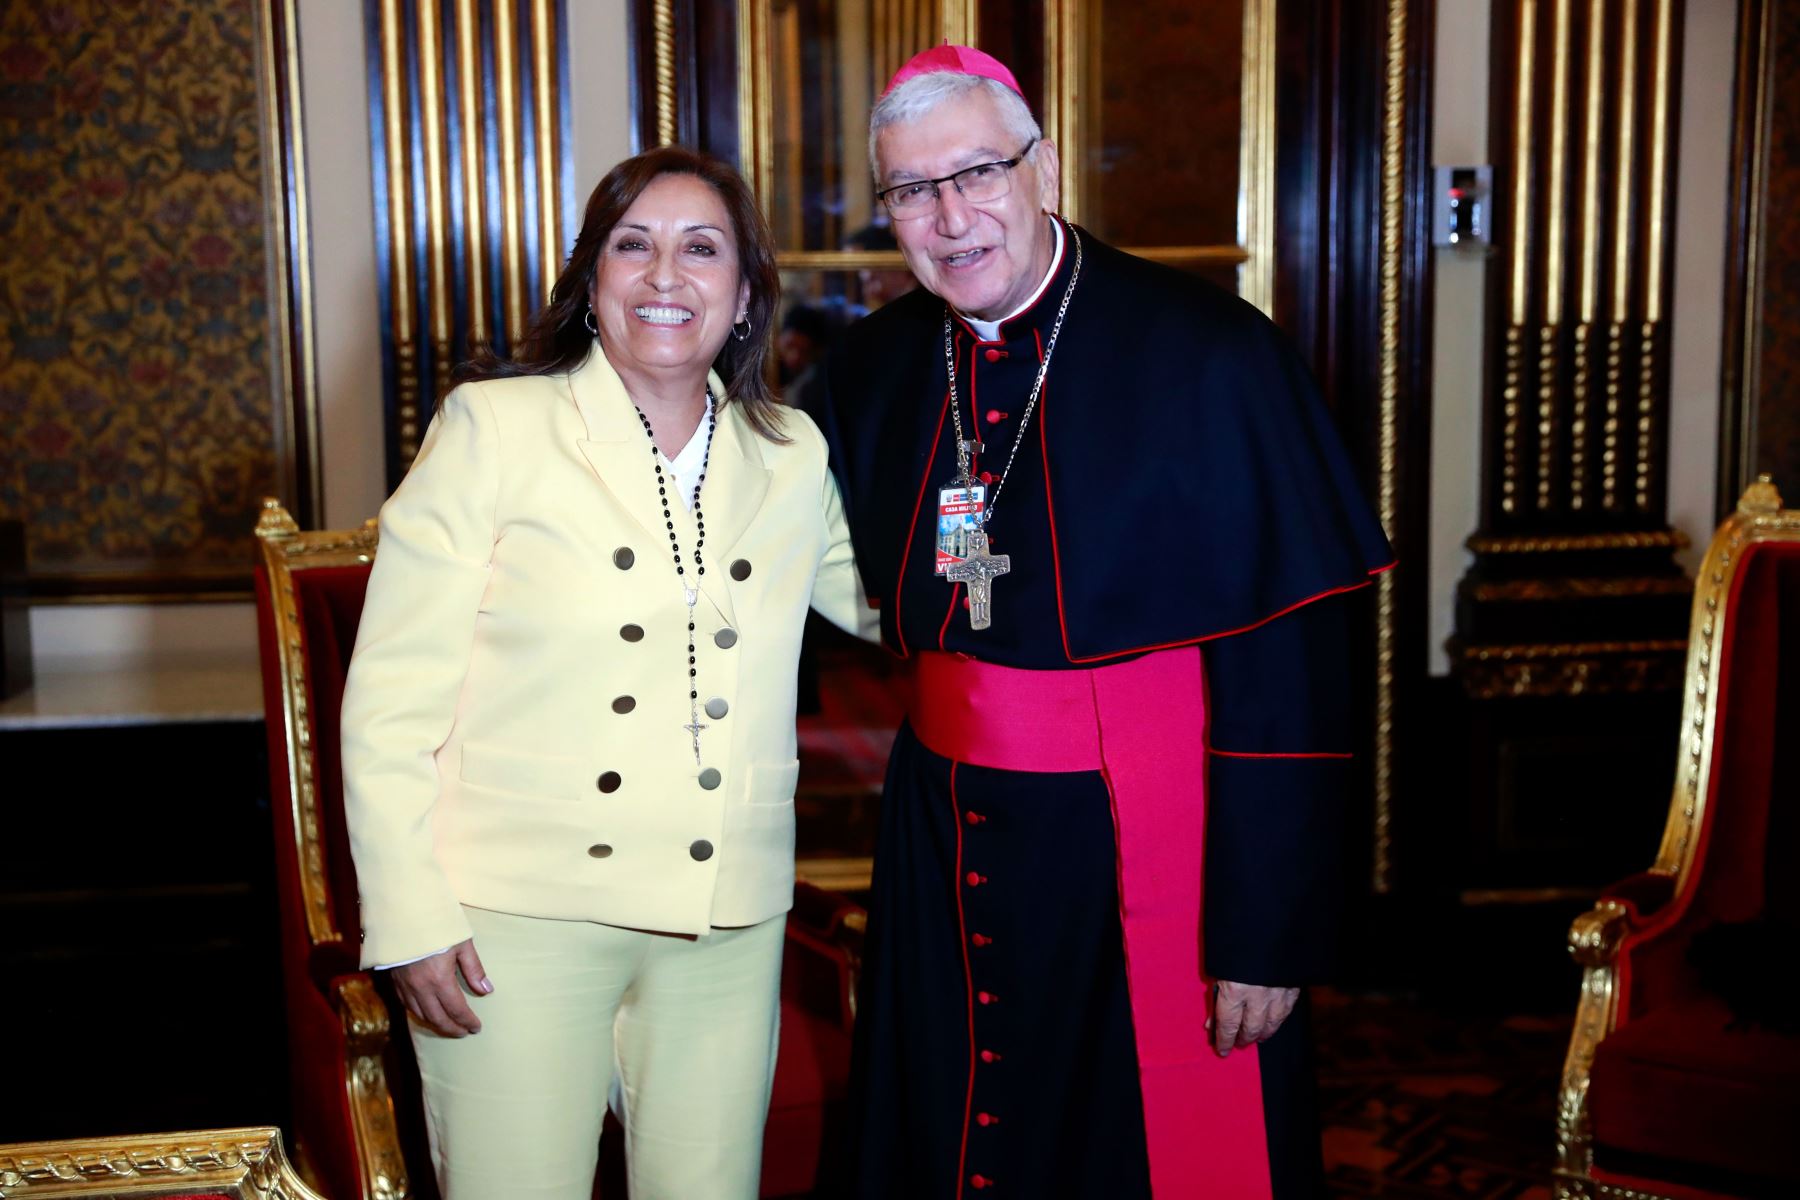  La presidenta de Perú recibe al arzobispo de Lima